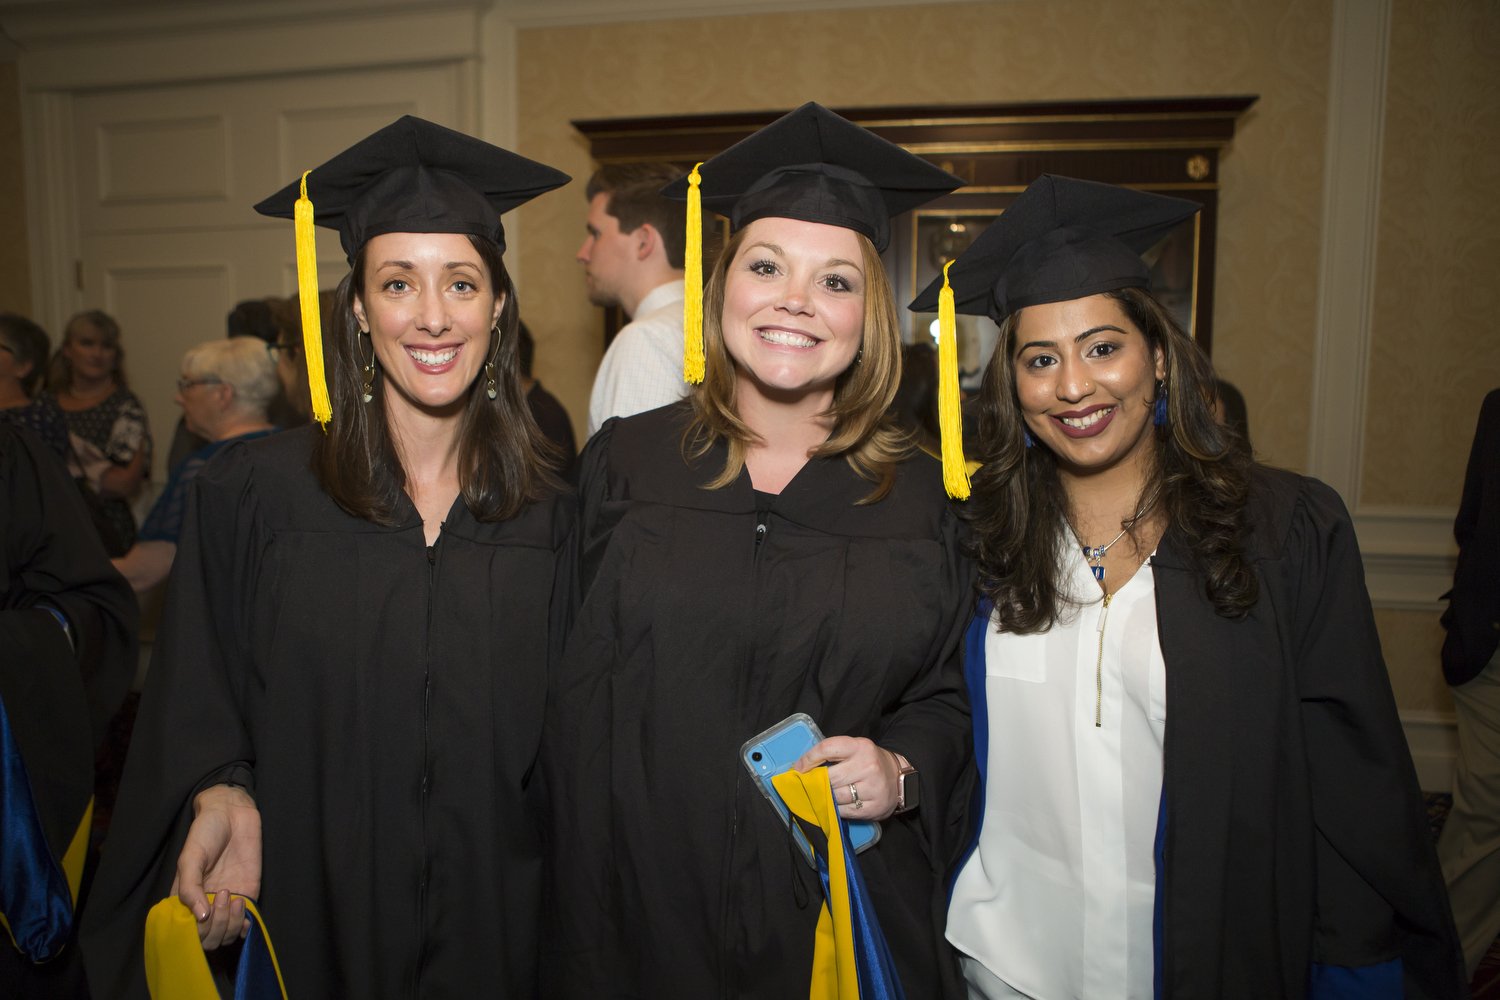  Graduation ceremony for the Duke University Physician Assistant program at the Washington Duke Inn on Sunday, May 12, 2019. 